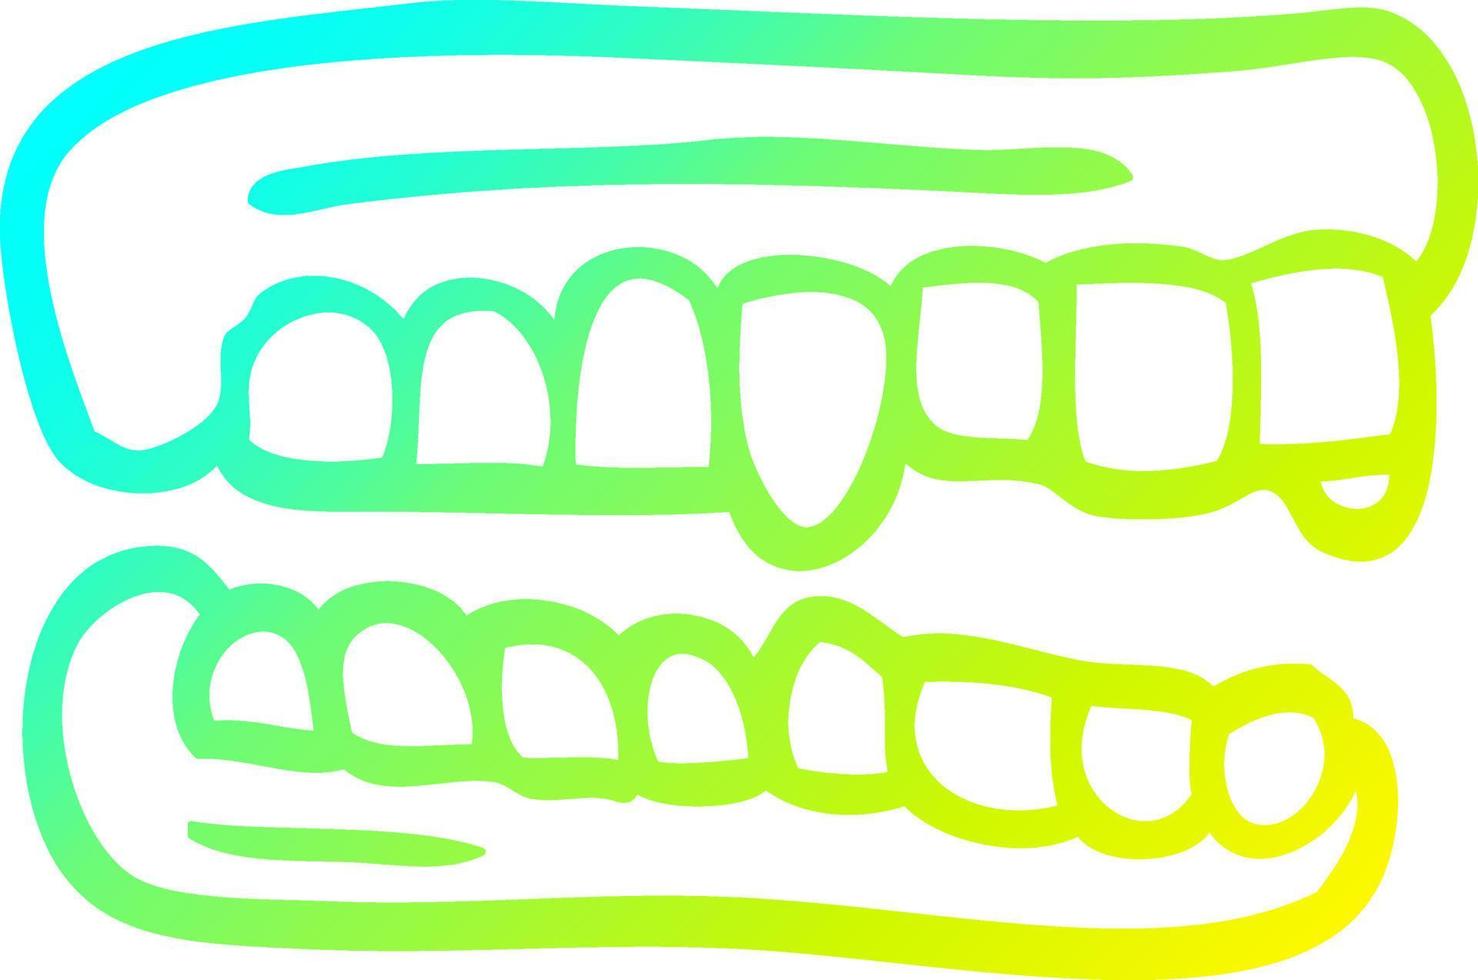 cold gradient line drawing cartoon false teeth vector